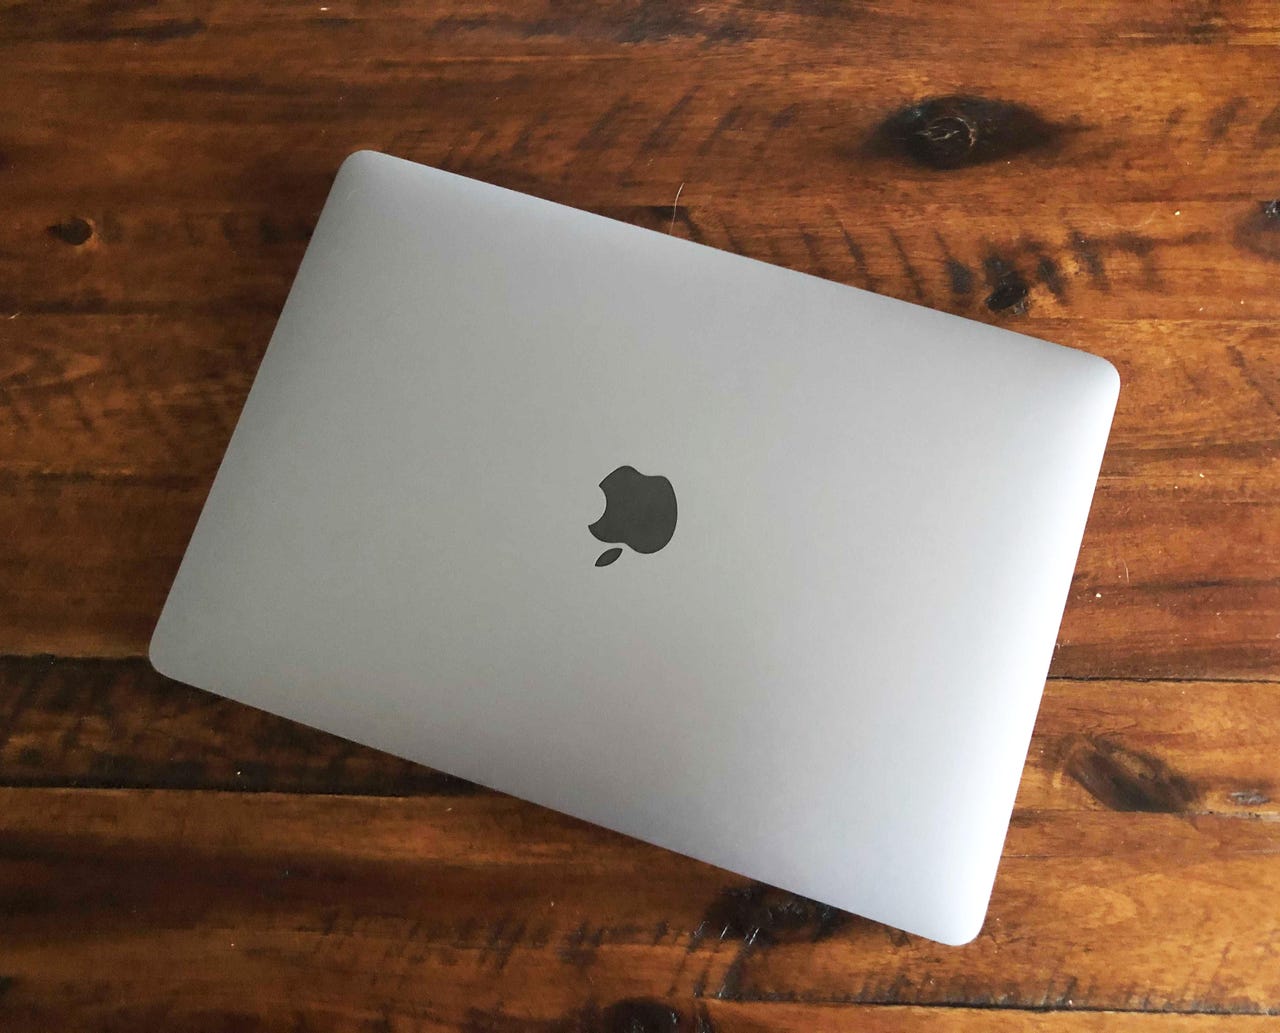 M1 MacBook Air review: Impressive, doesn't my Intel MacBook Pro | ZDNET